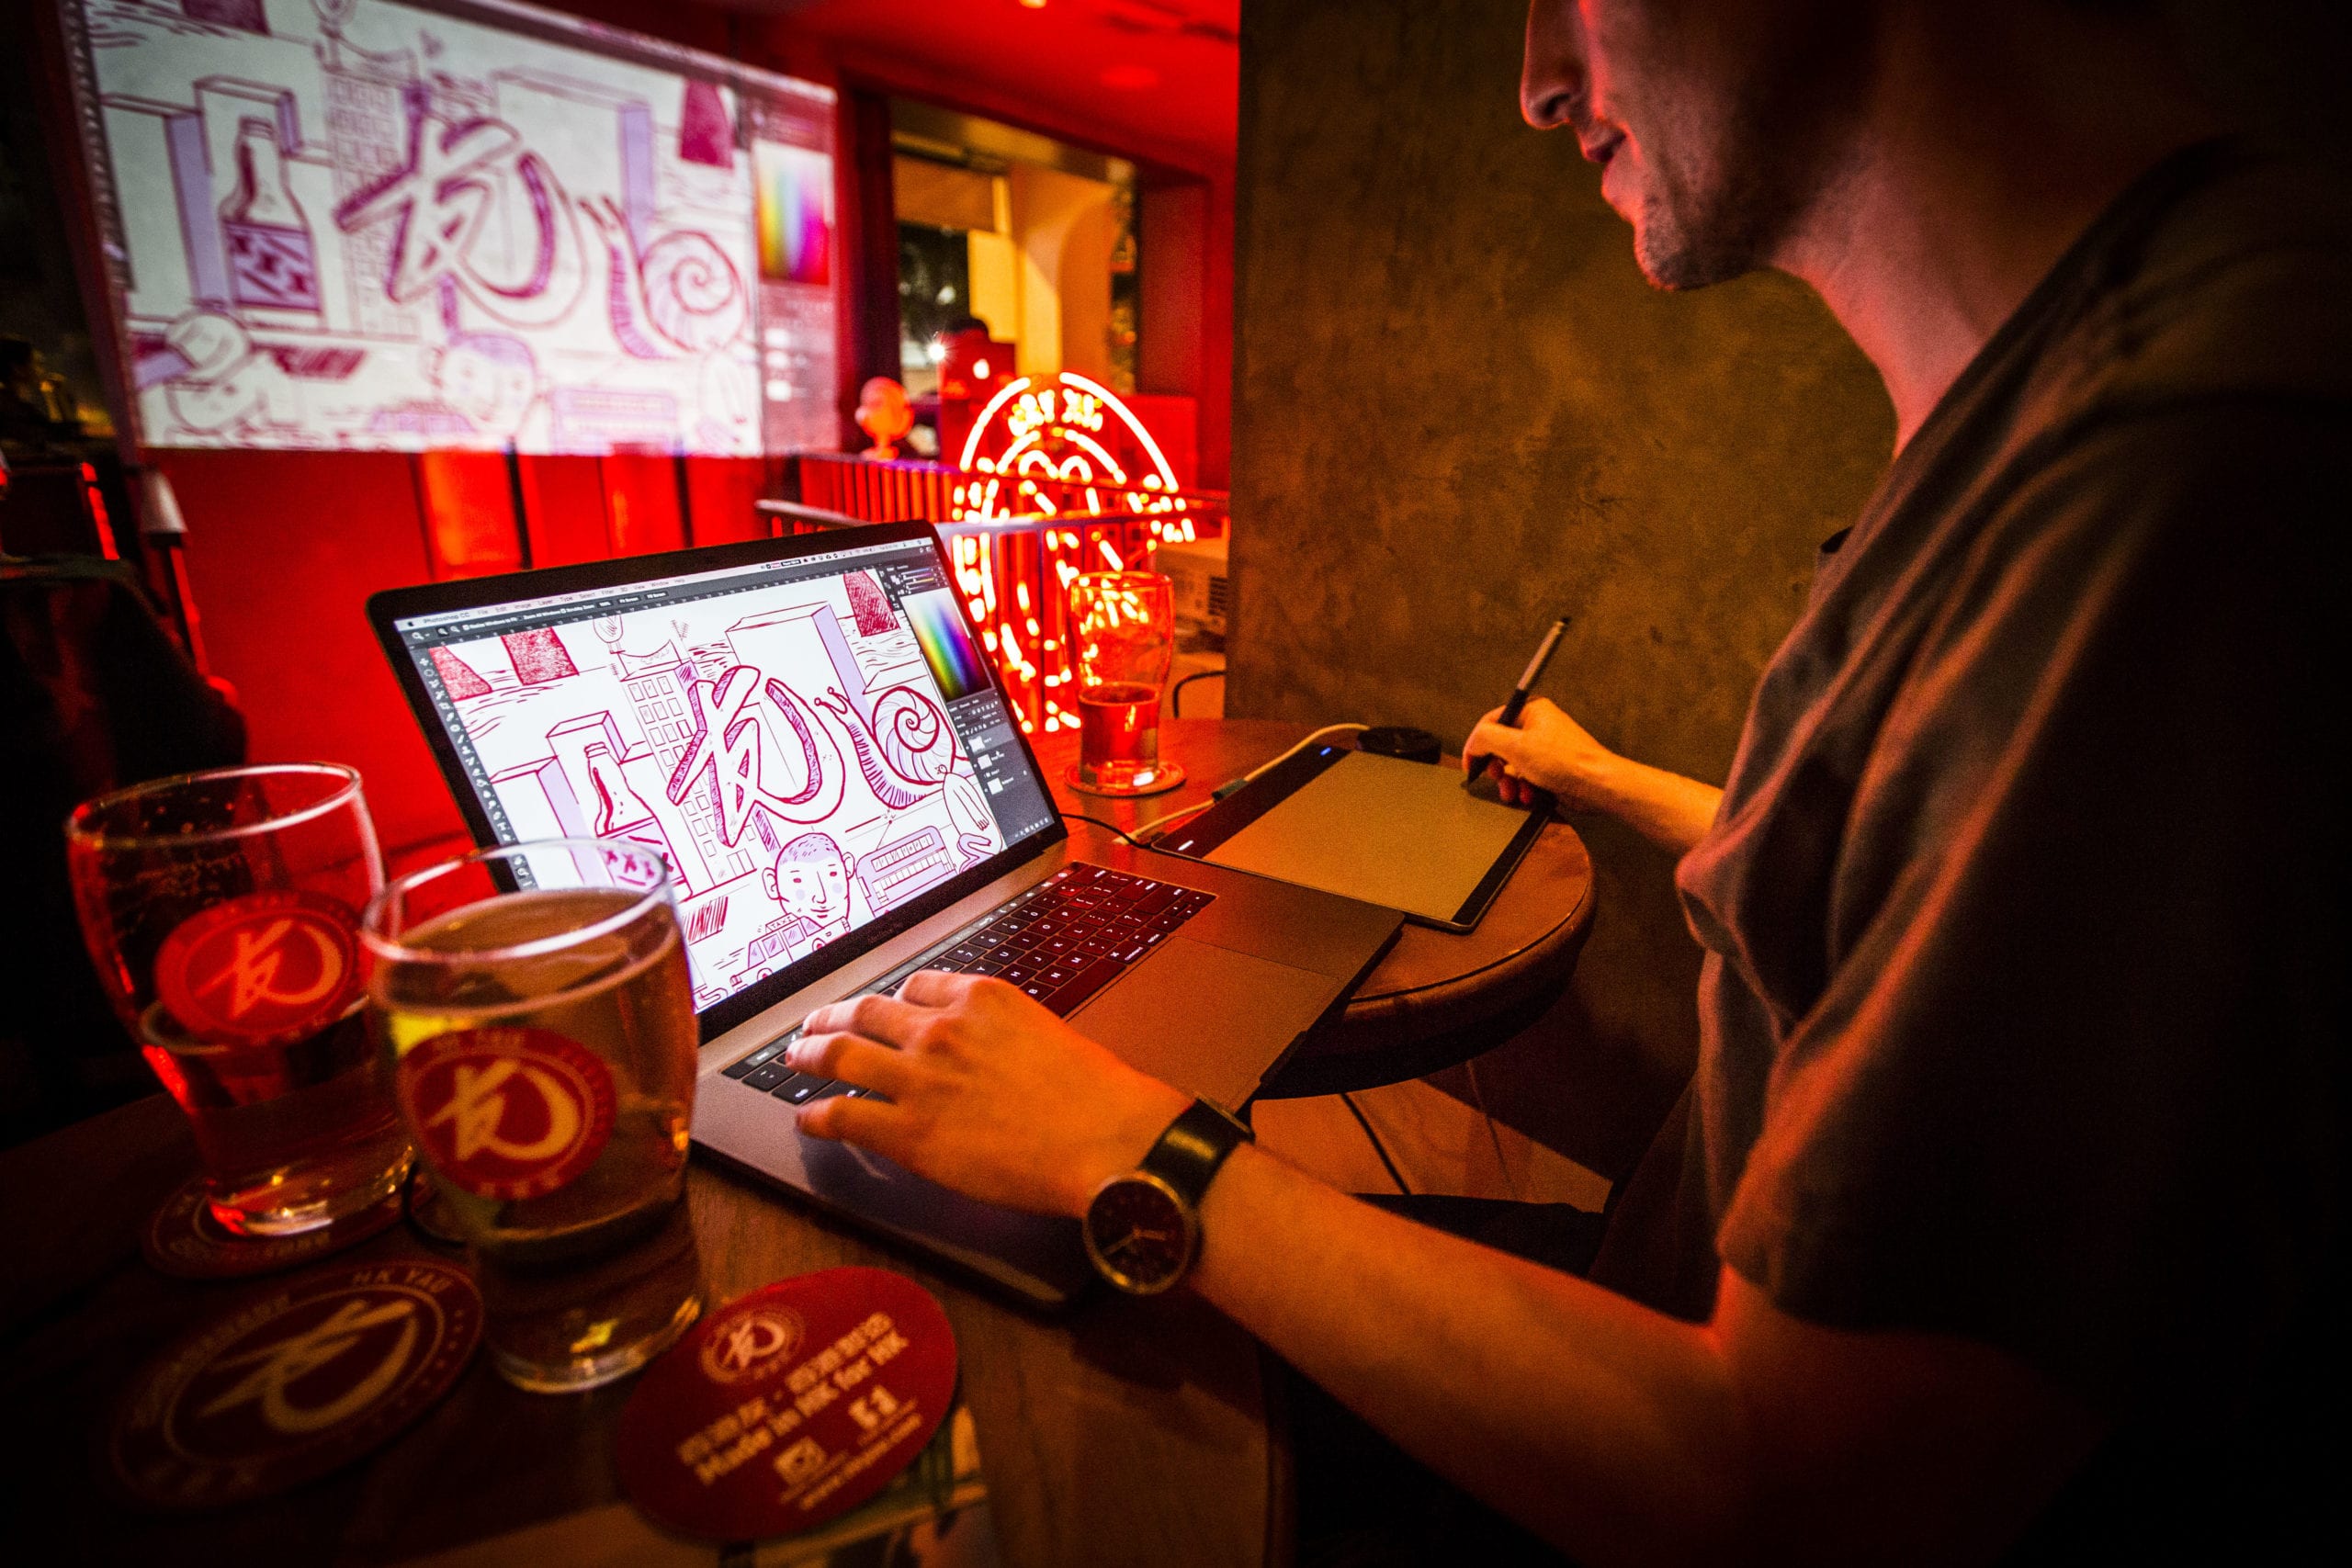 Creative designer making artworks for HK YAU in a bar